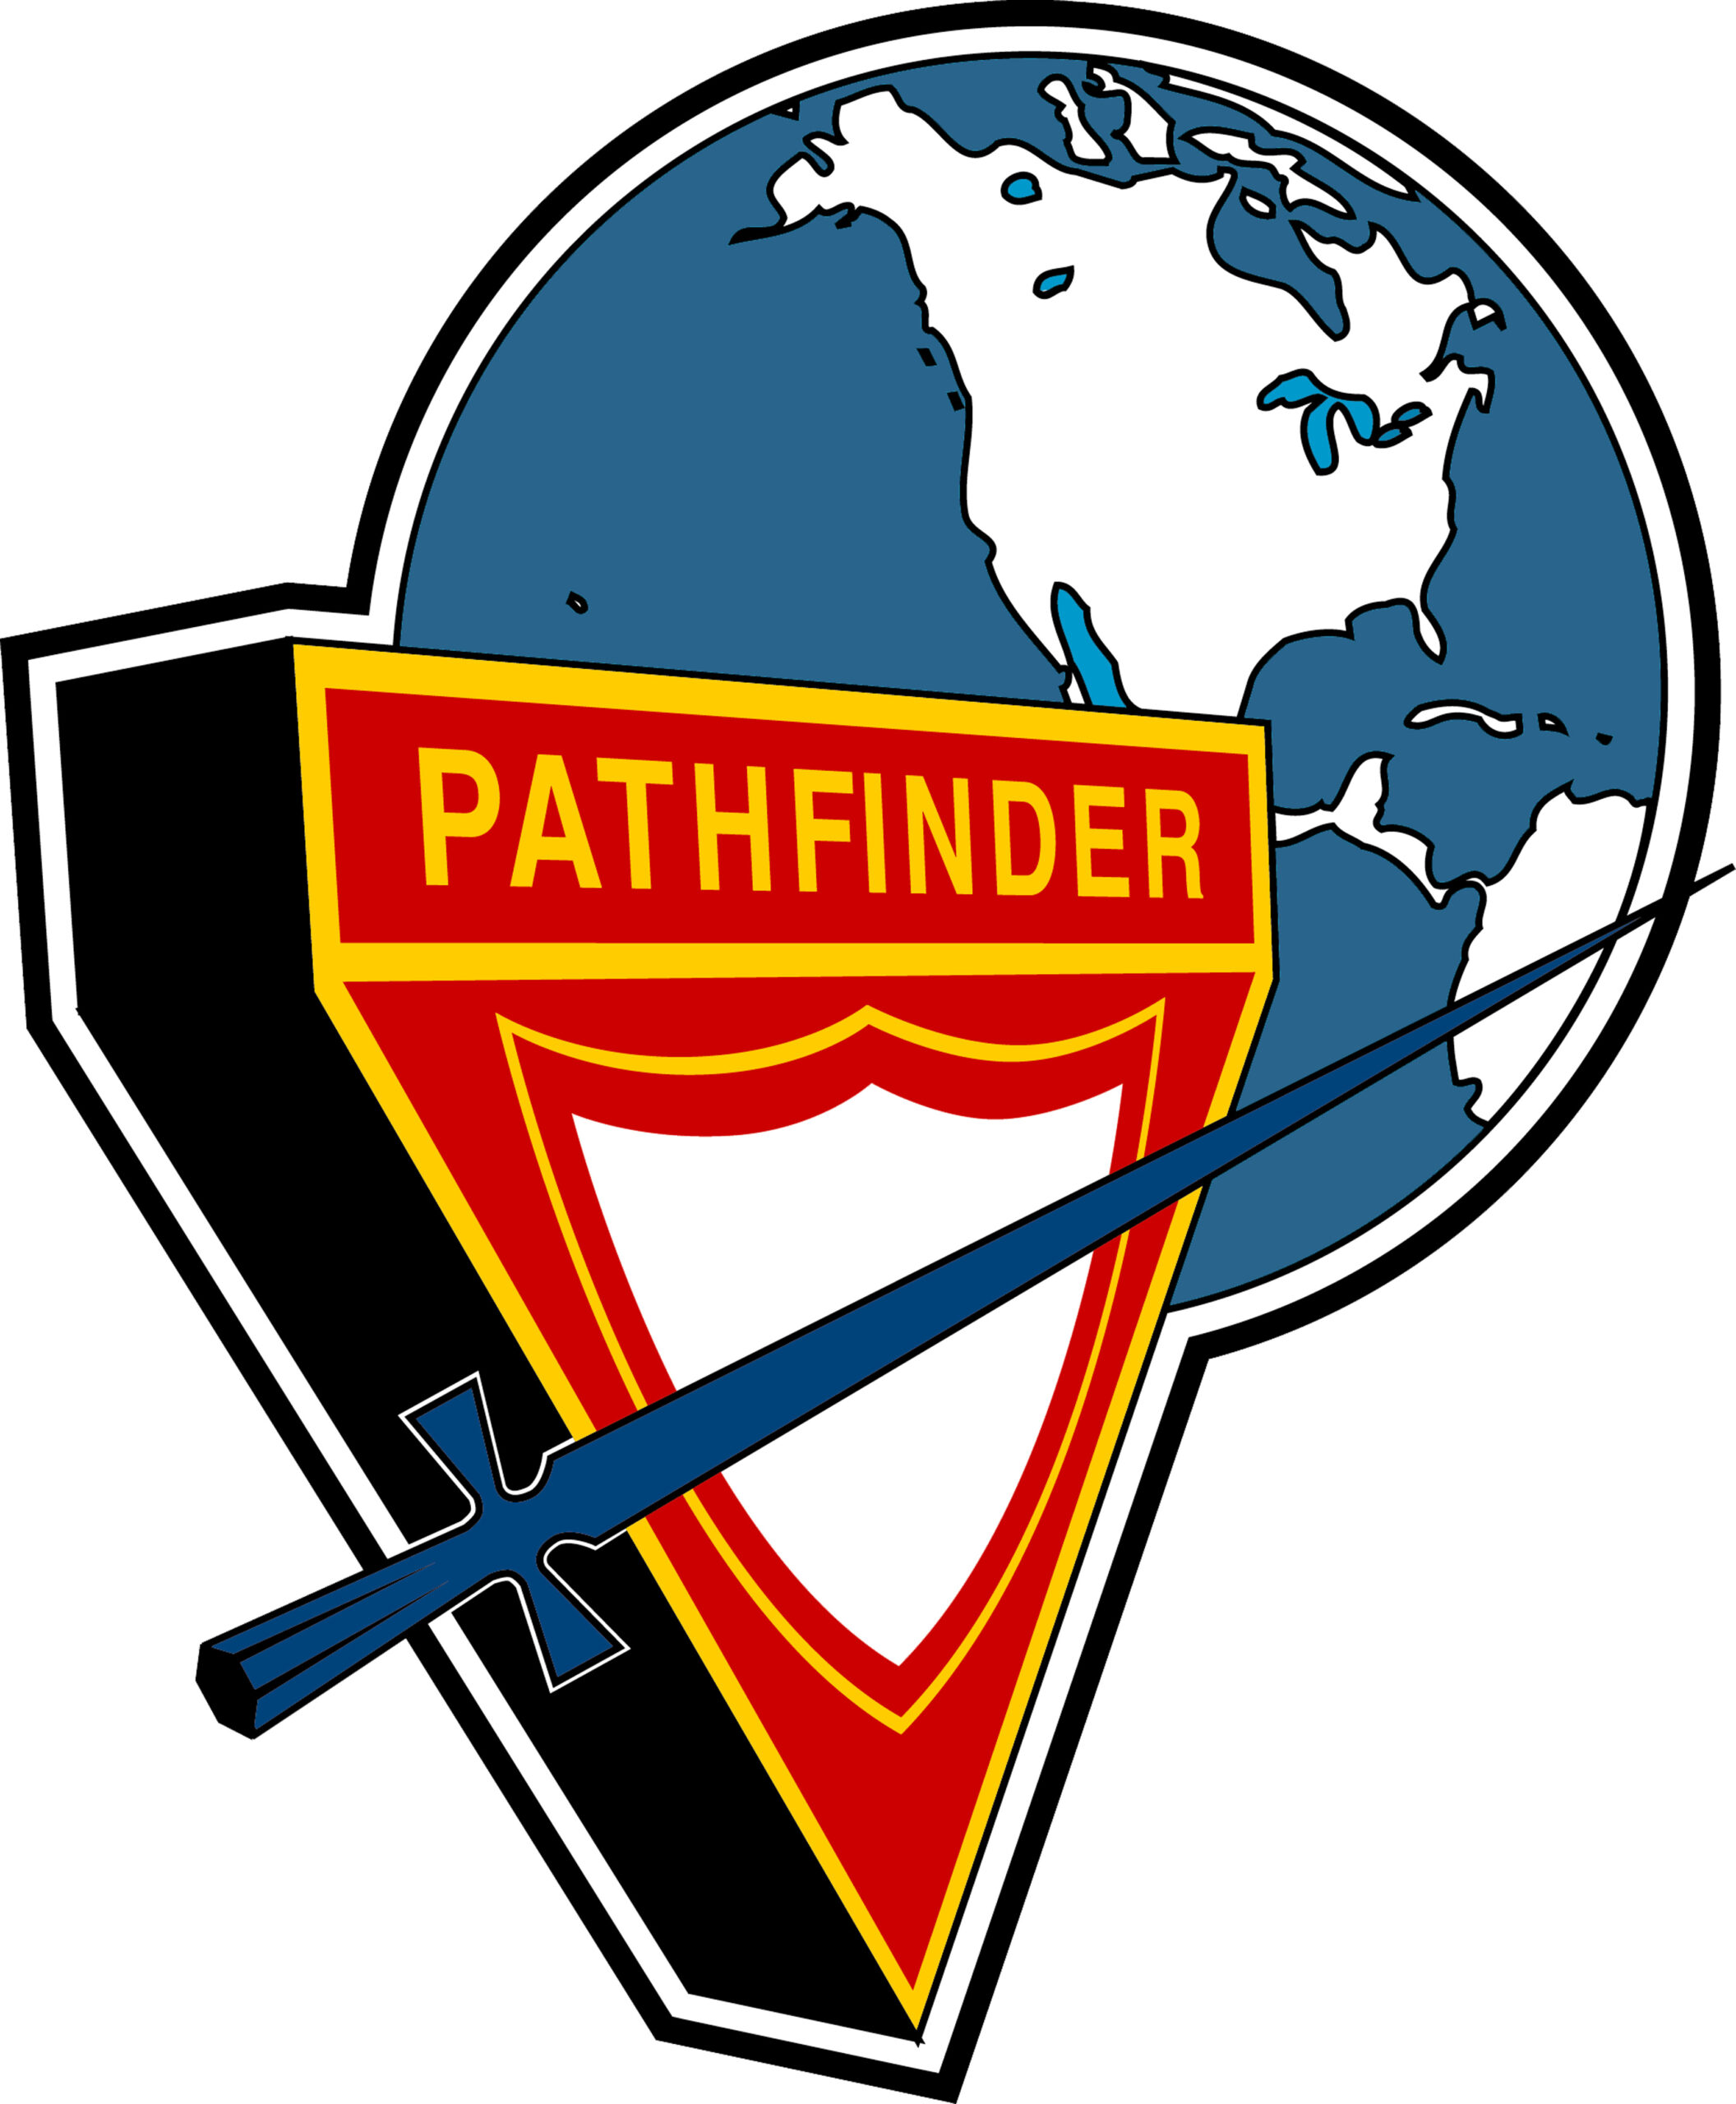 pathfinders logo